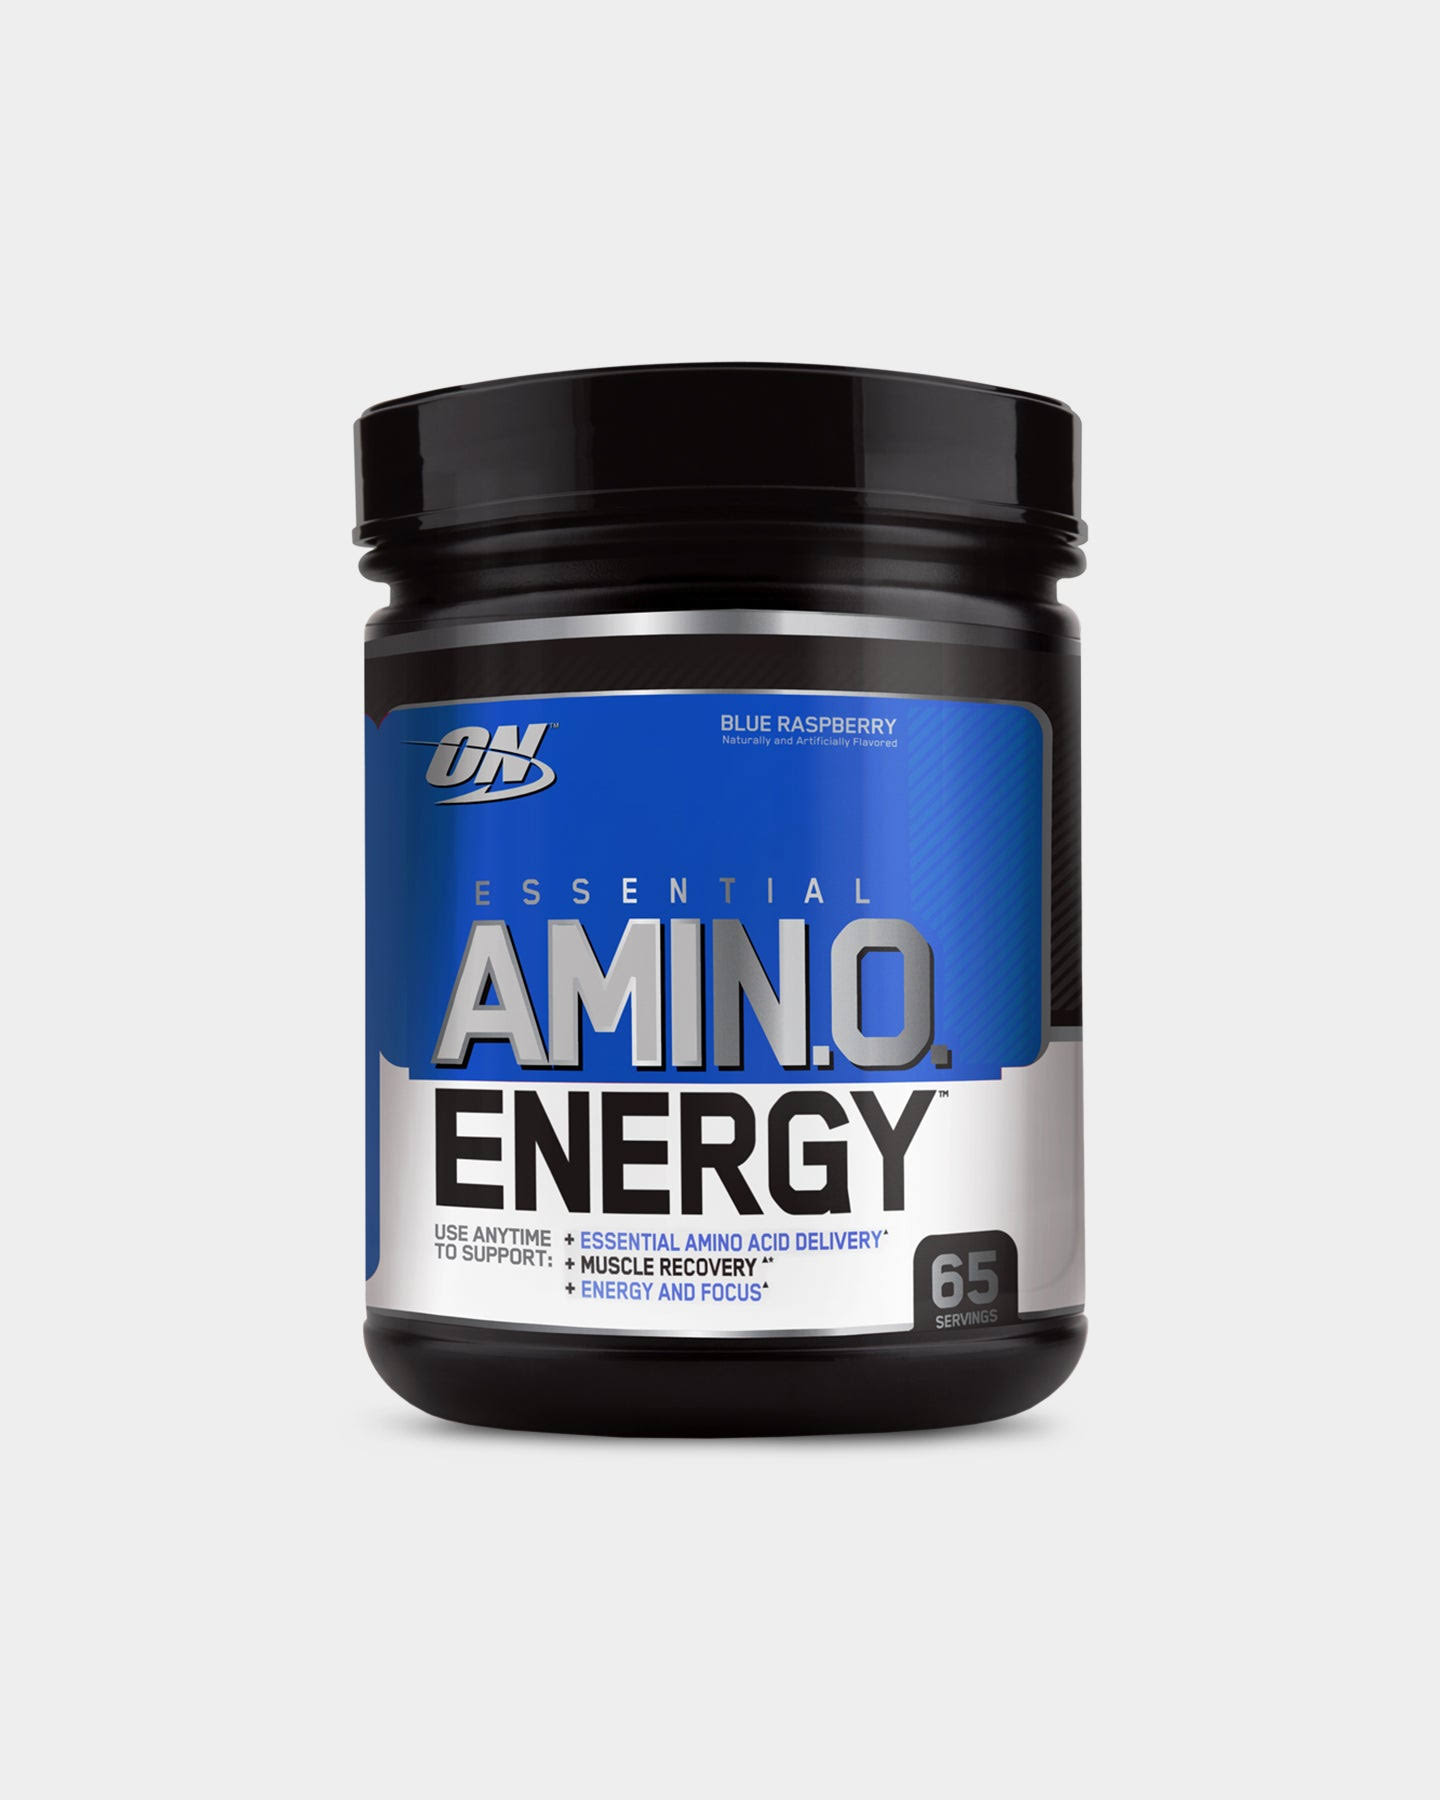 Optimum Nutrition Amino Energy Sports Supplement - Blue Raspberry, 65 Servings